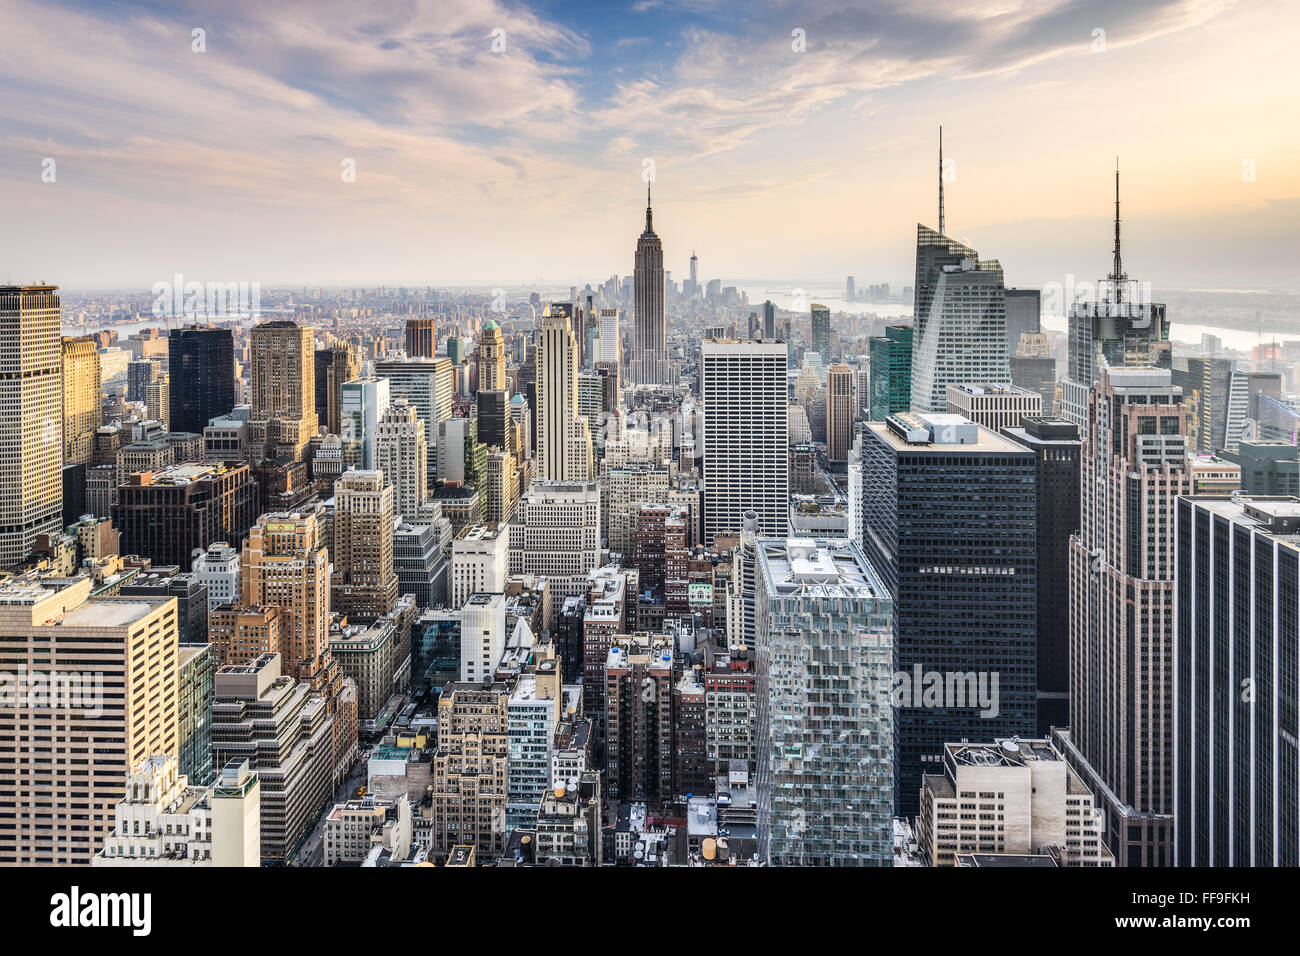 New York City, USA midtown Manhattan financial district skyline. Stock Photo